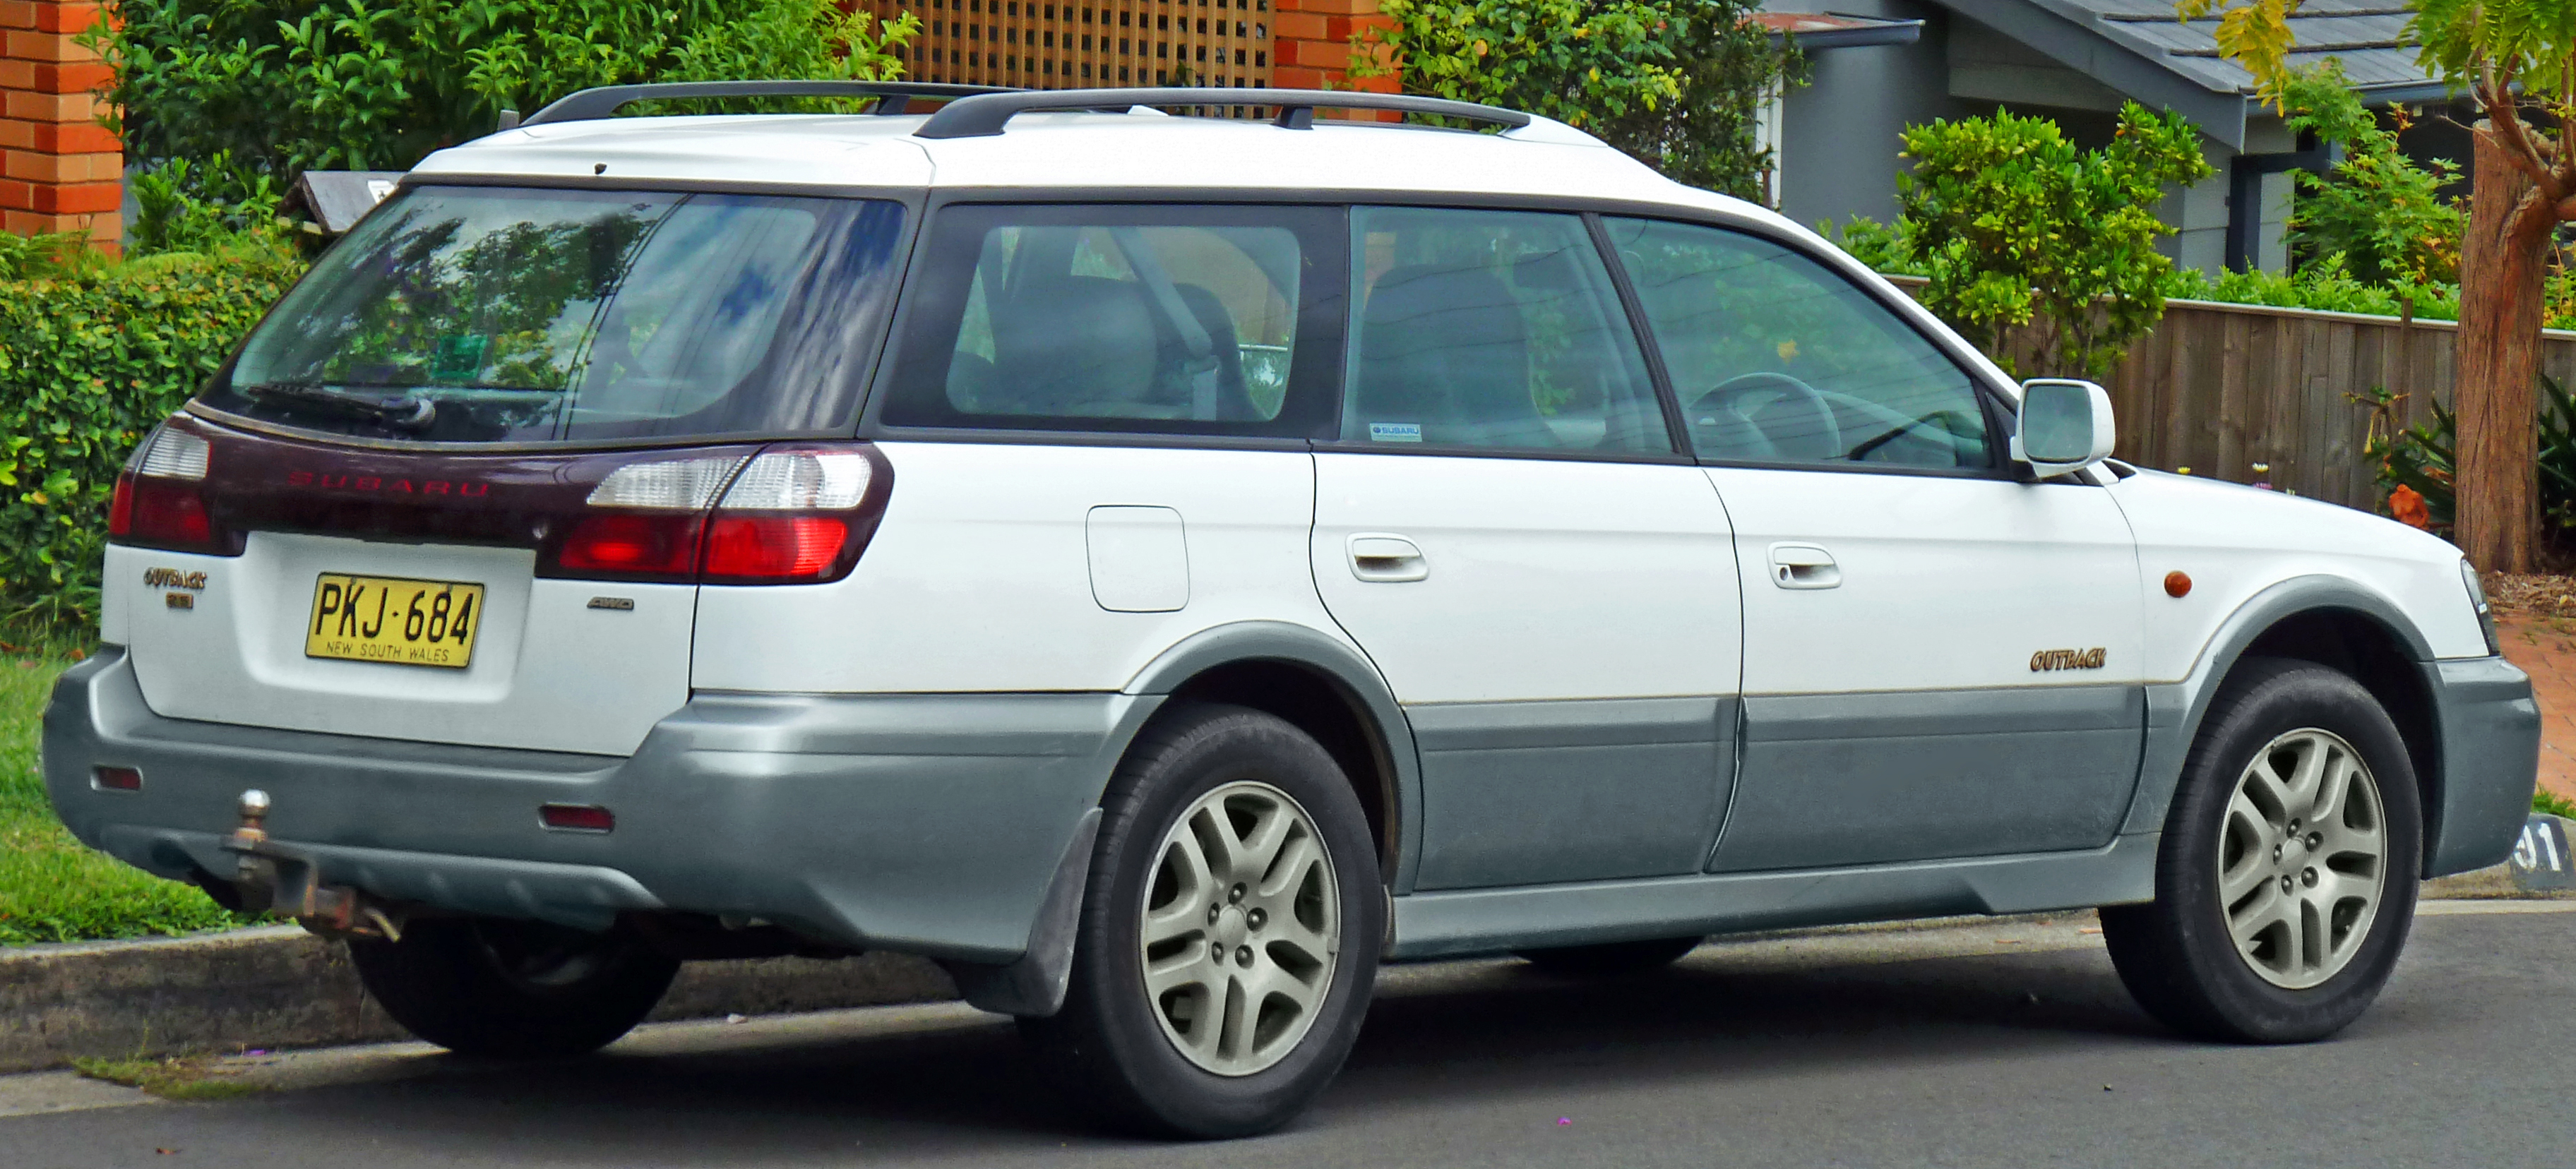 File:2001 Subaru Outback (BH9 MY02) Limited station wagon (2011-04-02)  02.jpg - Wikimedia Commons